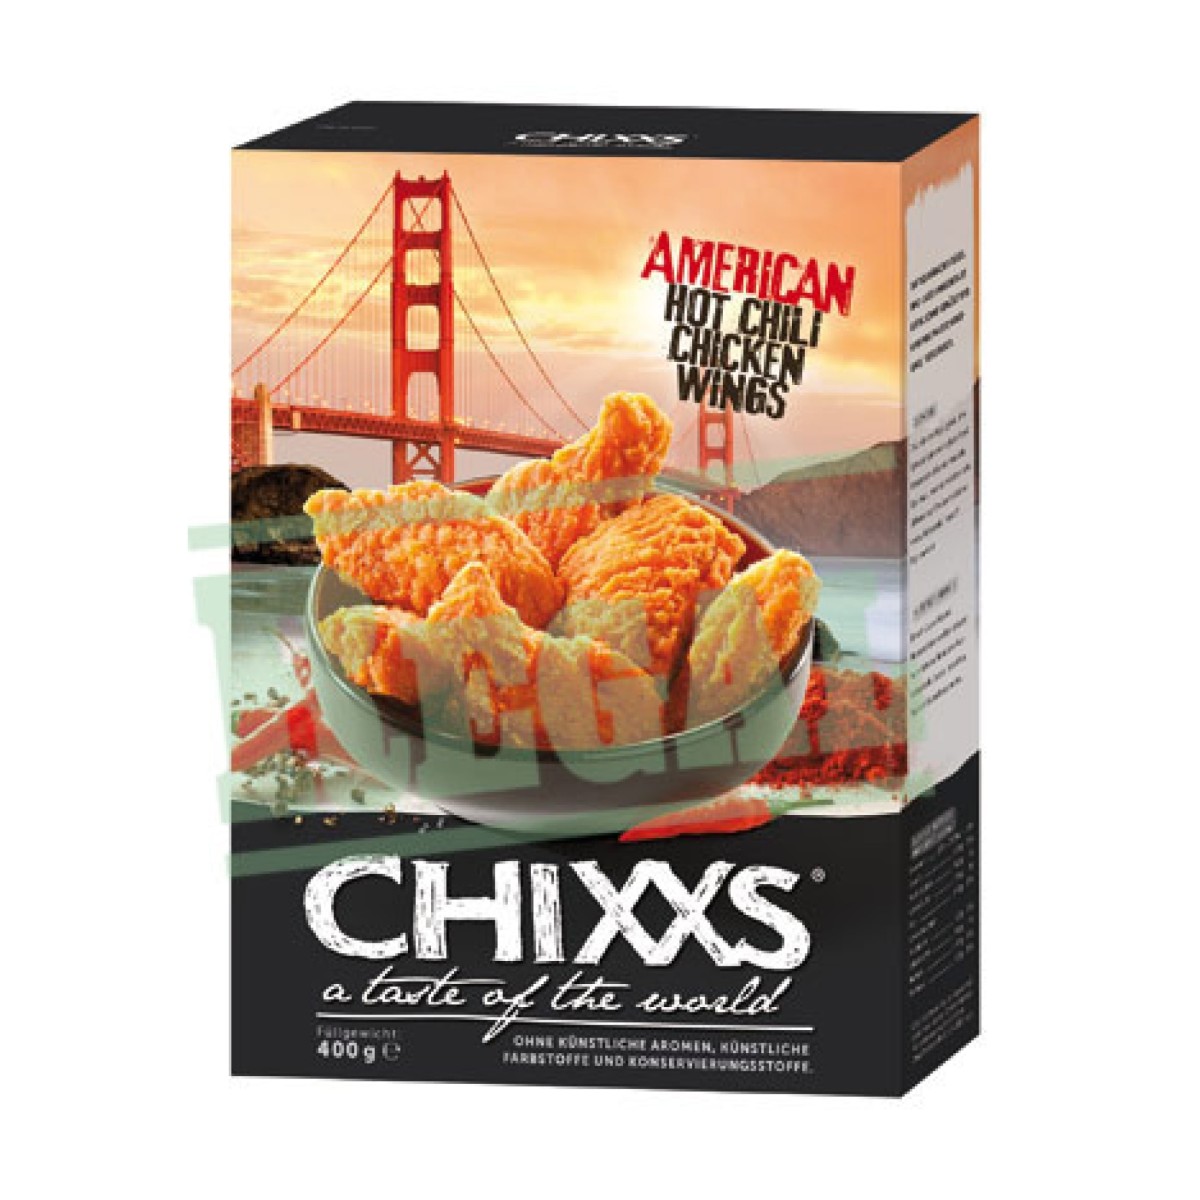 → American REGAL Hot Wings Chicken Chili CHIXXS